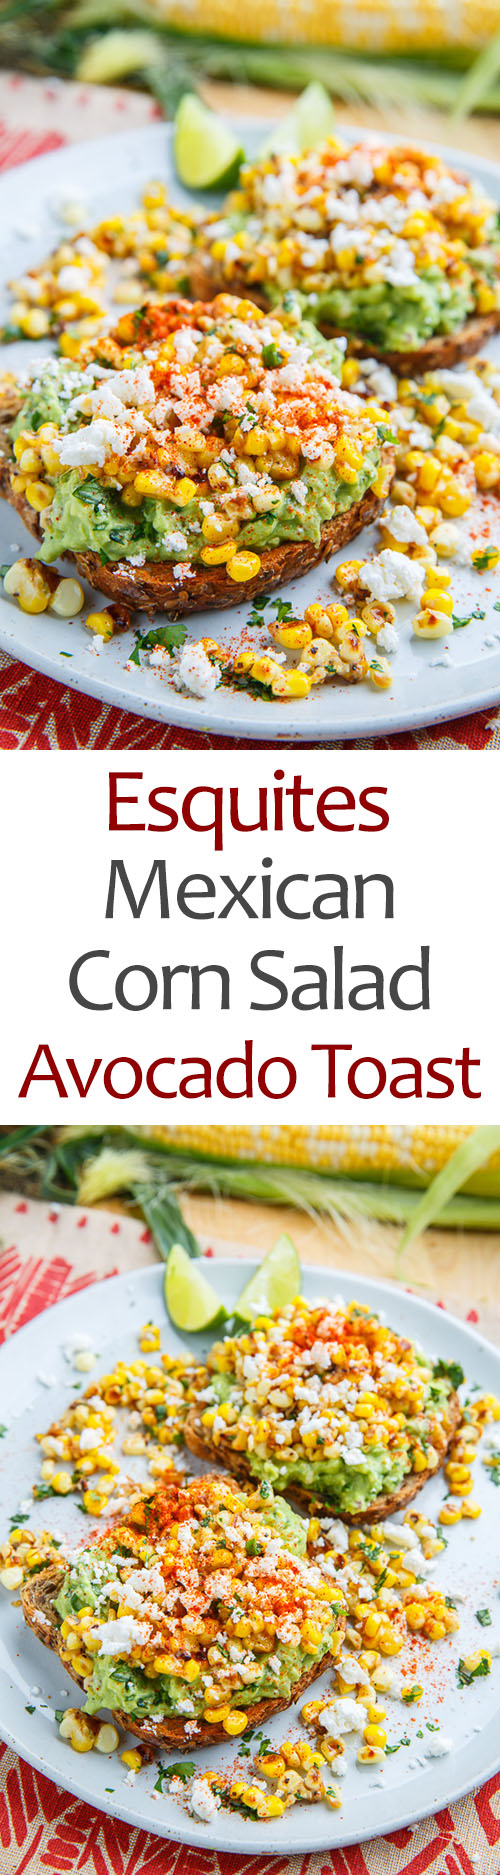 Esquites (Mexican Corn Salad) Avocado Toast